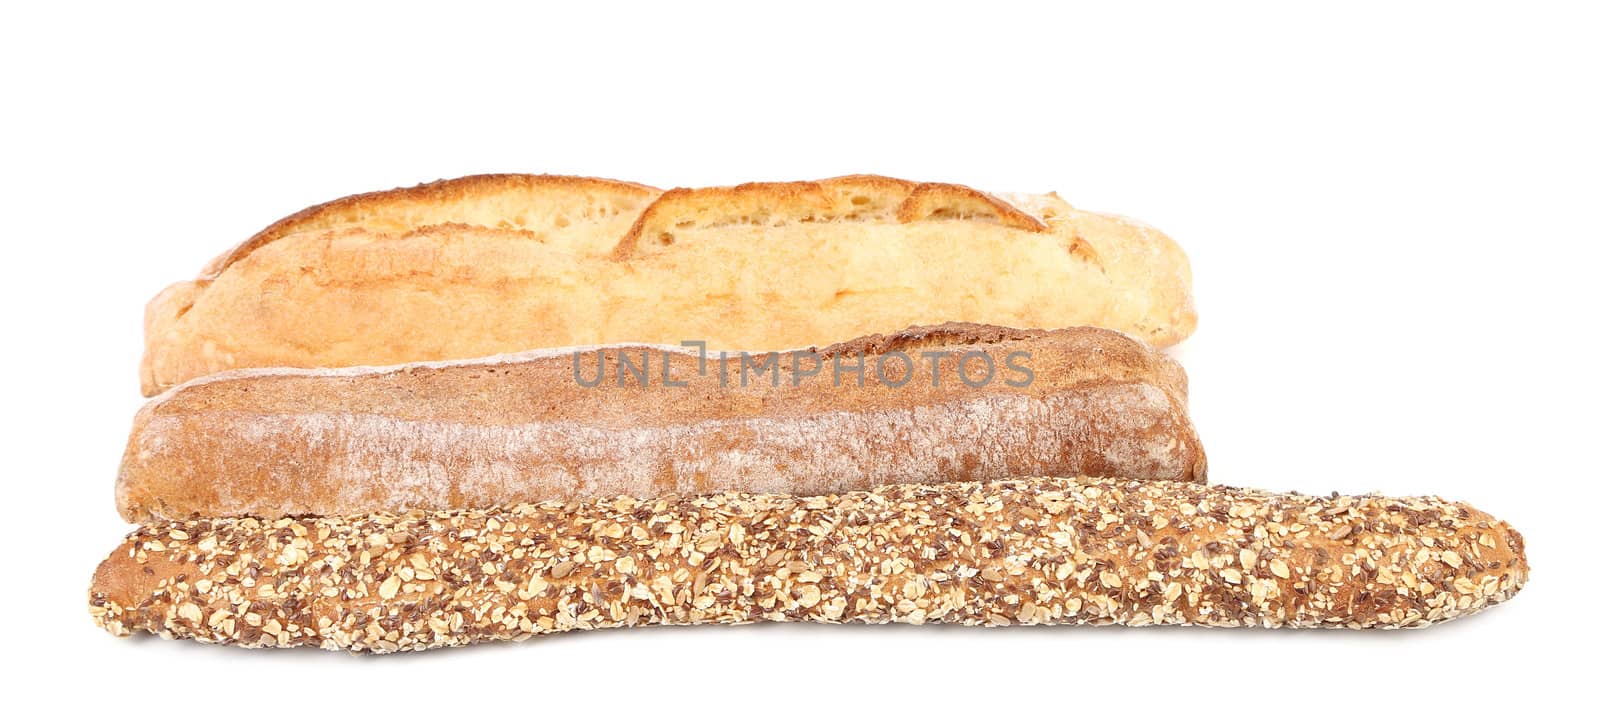 Multi - grain brown and white bread. by indigolotos